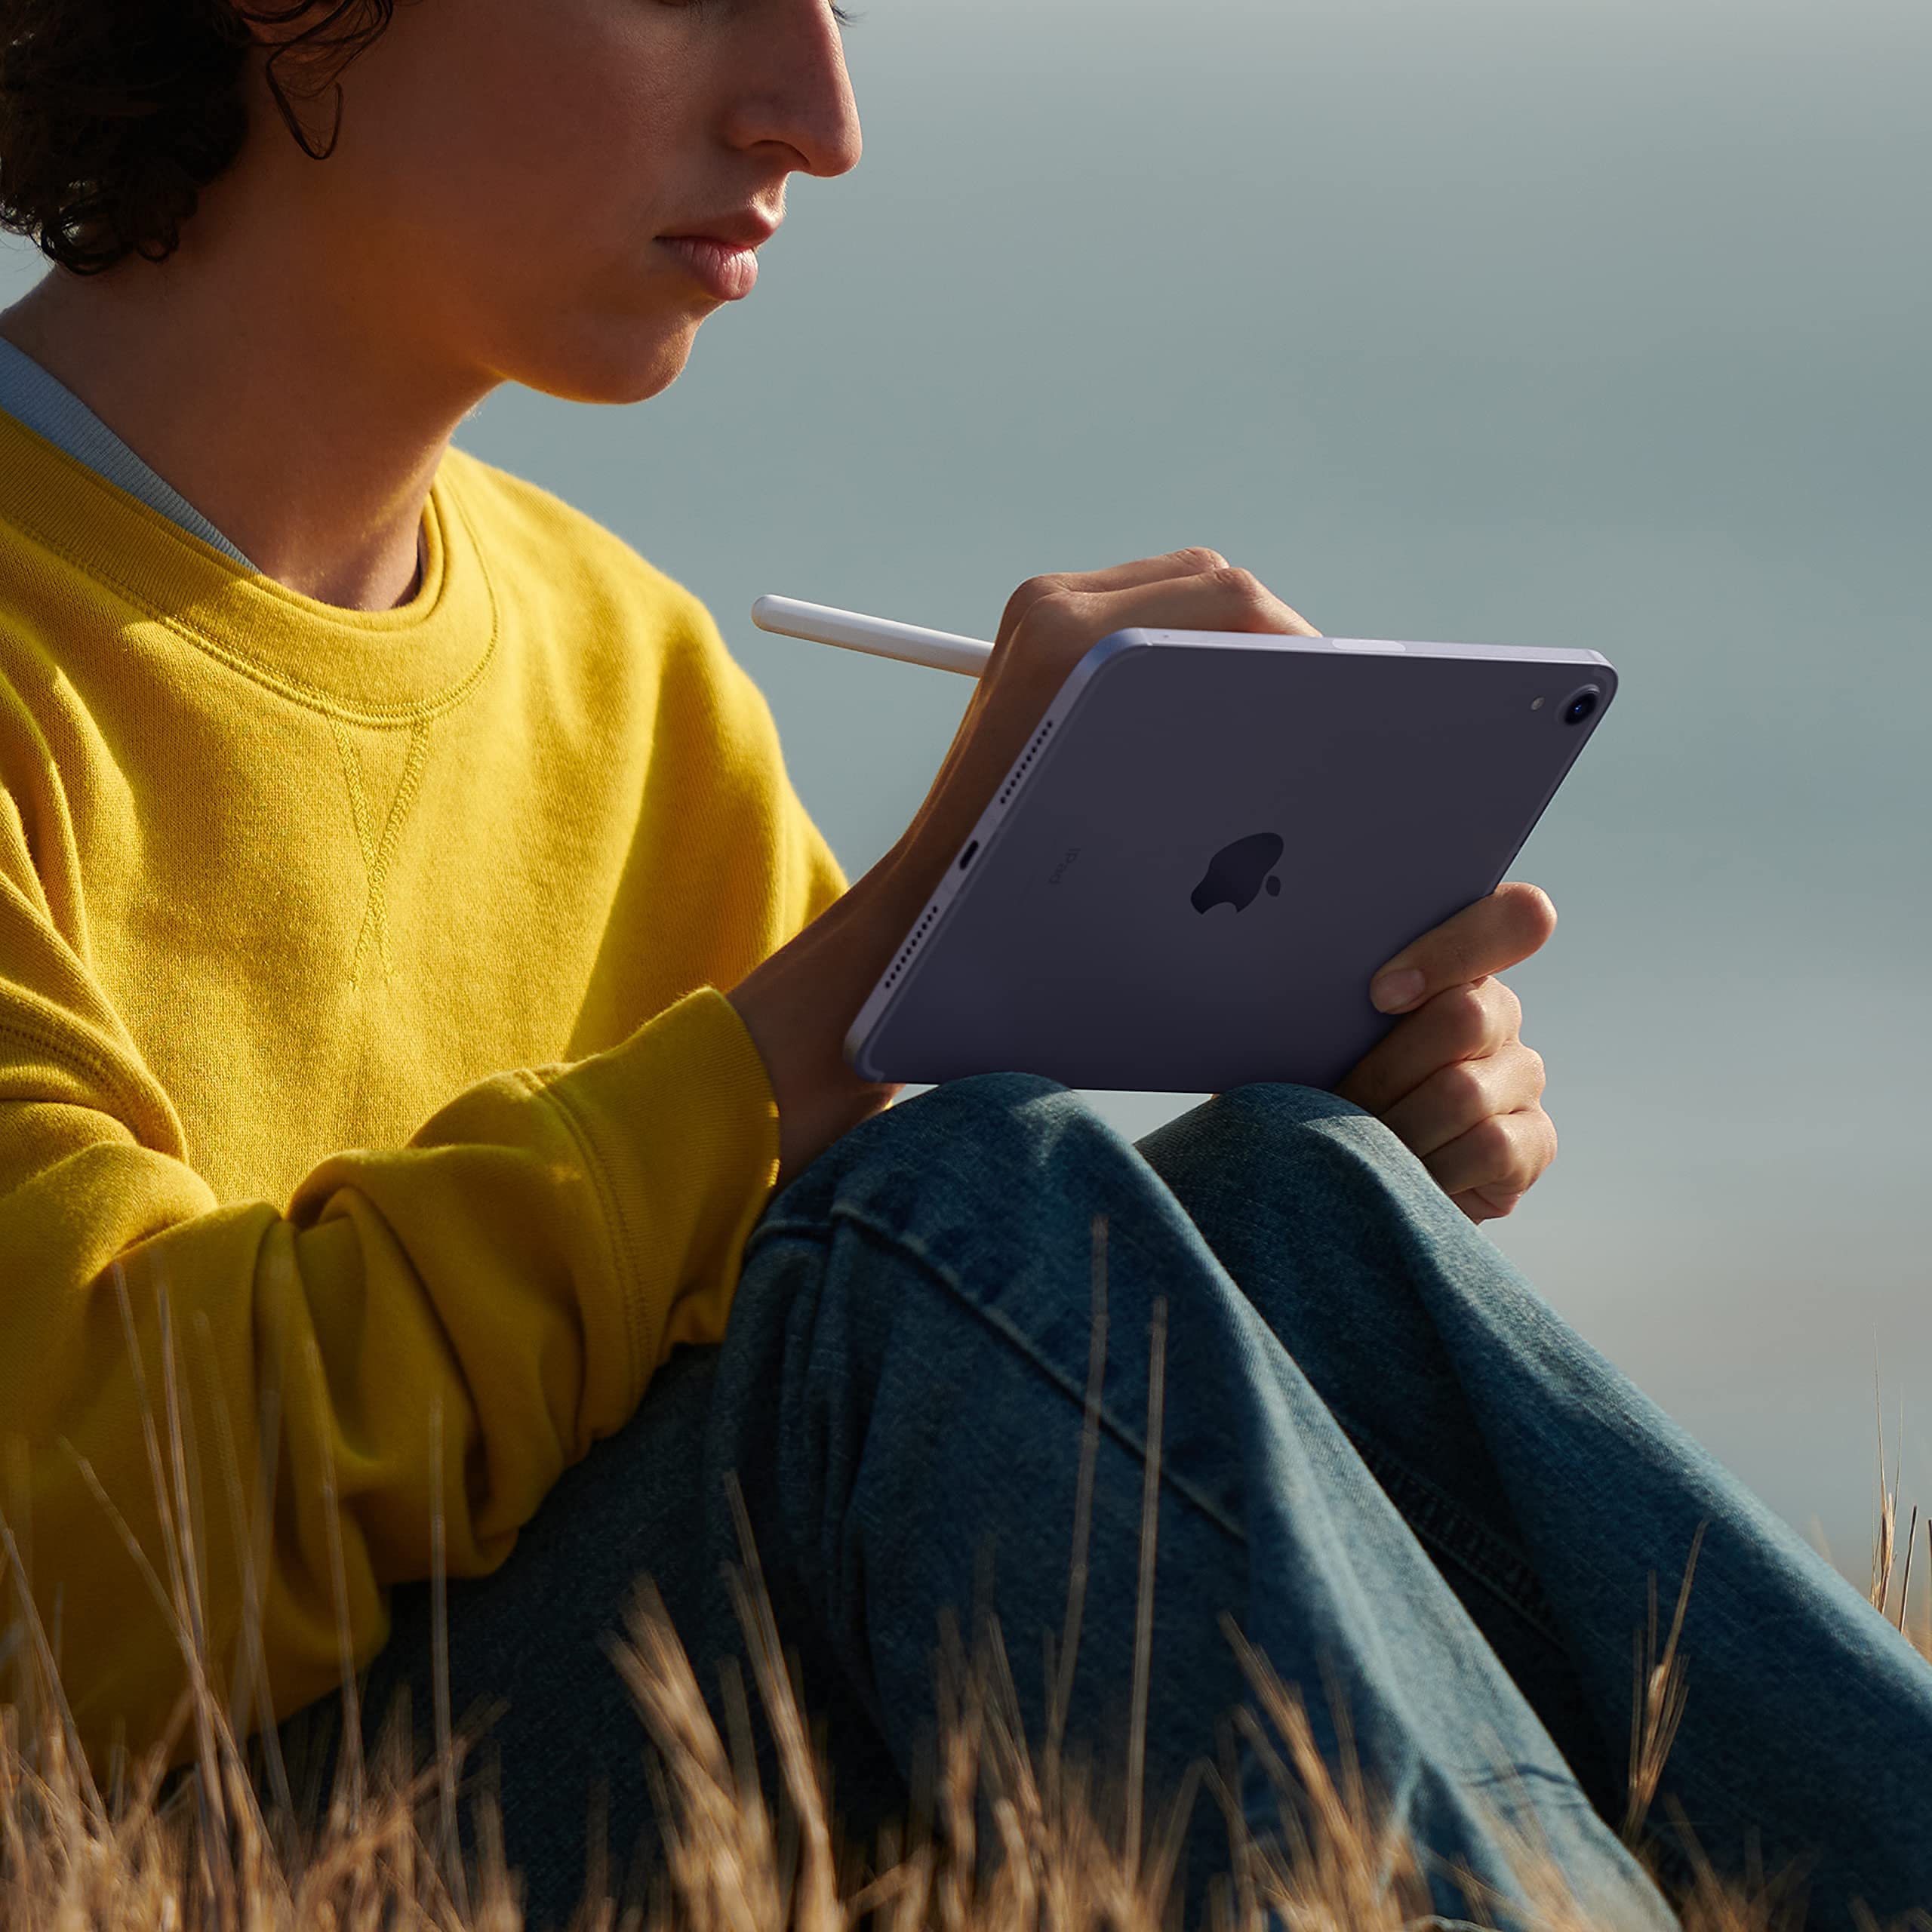 2021 Apple iPad Mini 6 (8.3 inch, Wi-Fi + Cellular, 256GB) Purple (Renewed)